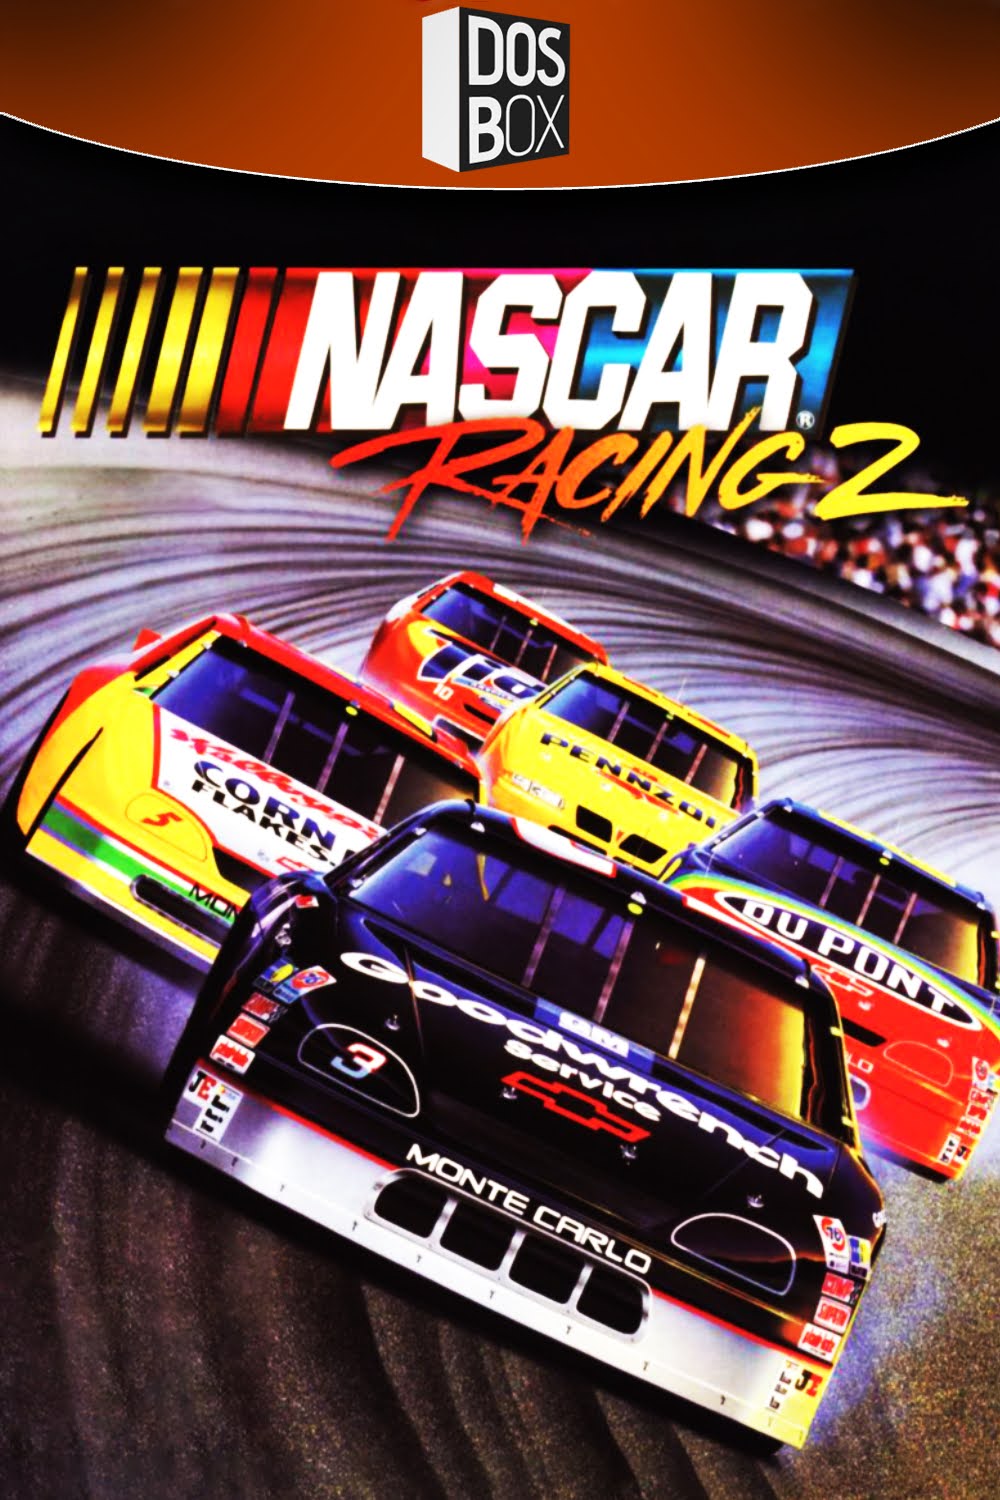 The Collection Chamber NASCAR RACING 2